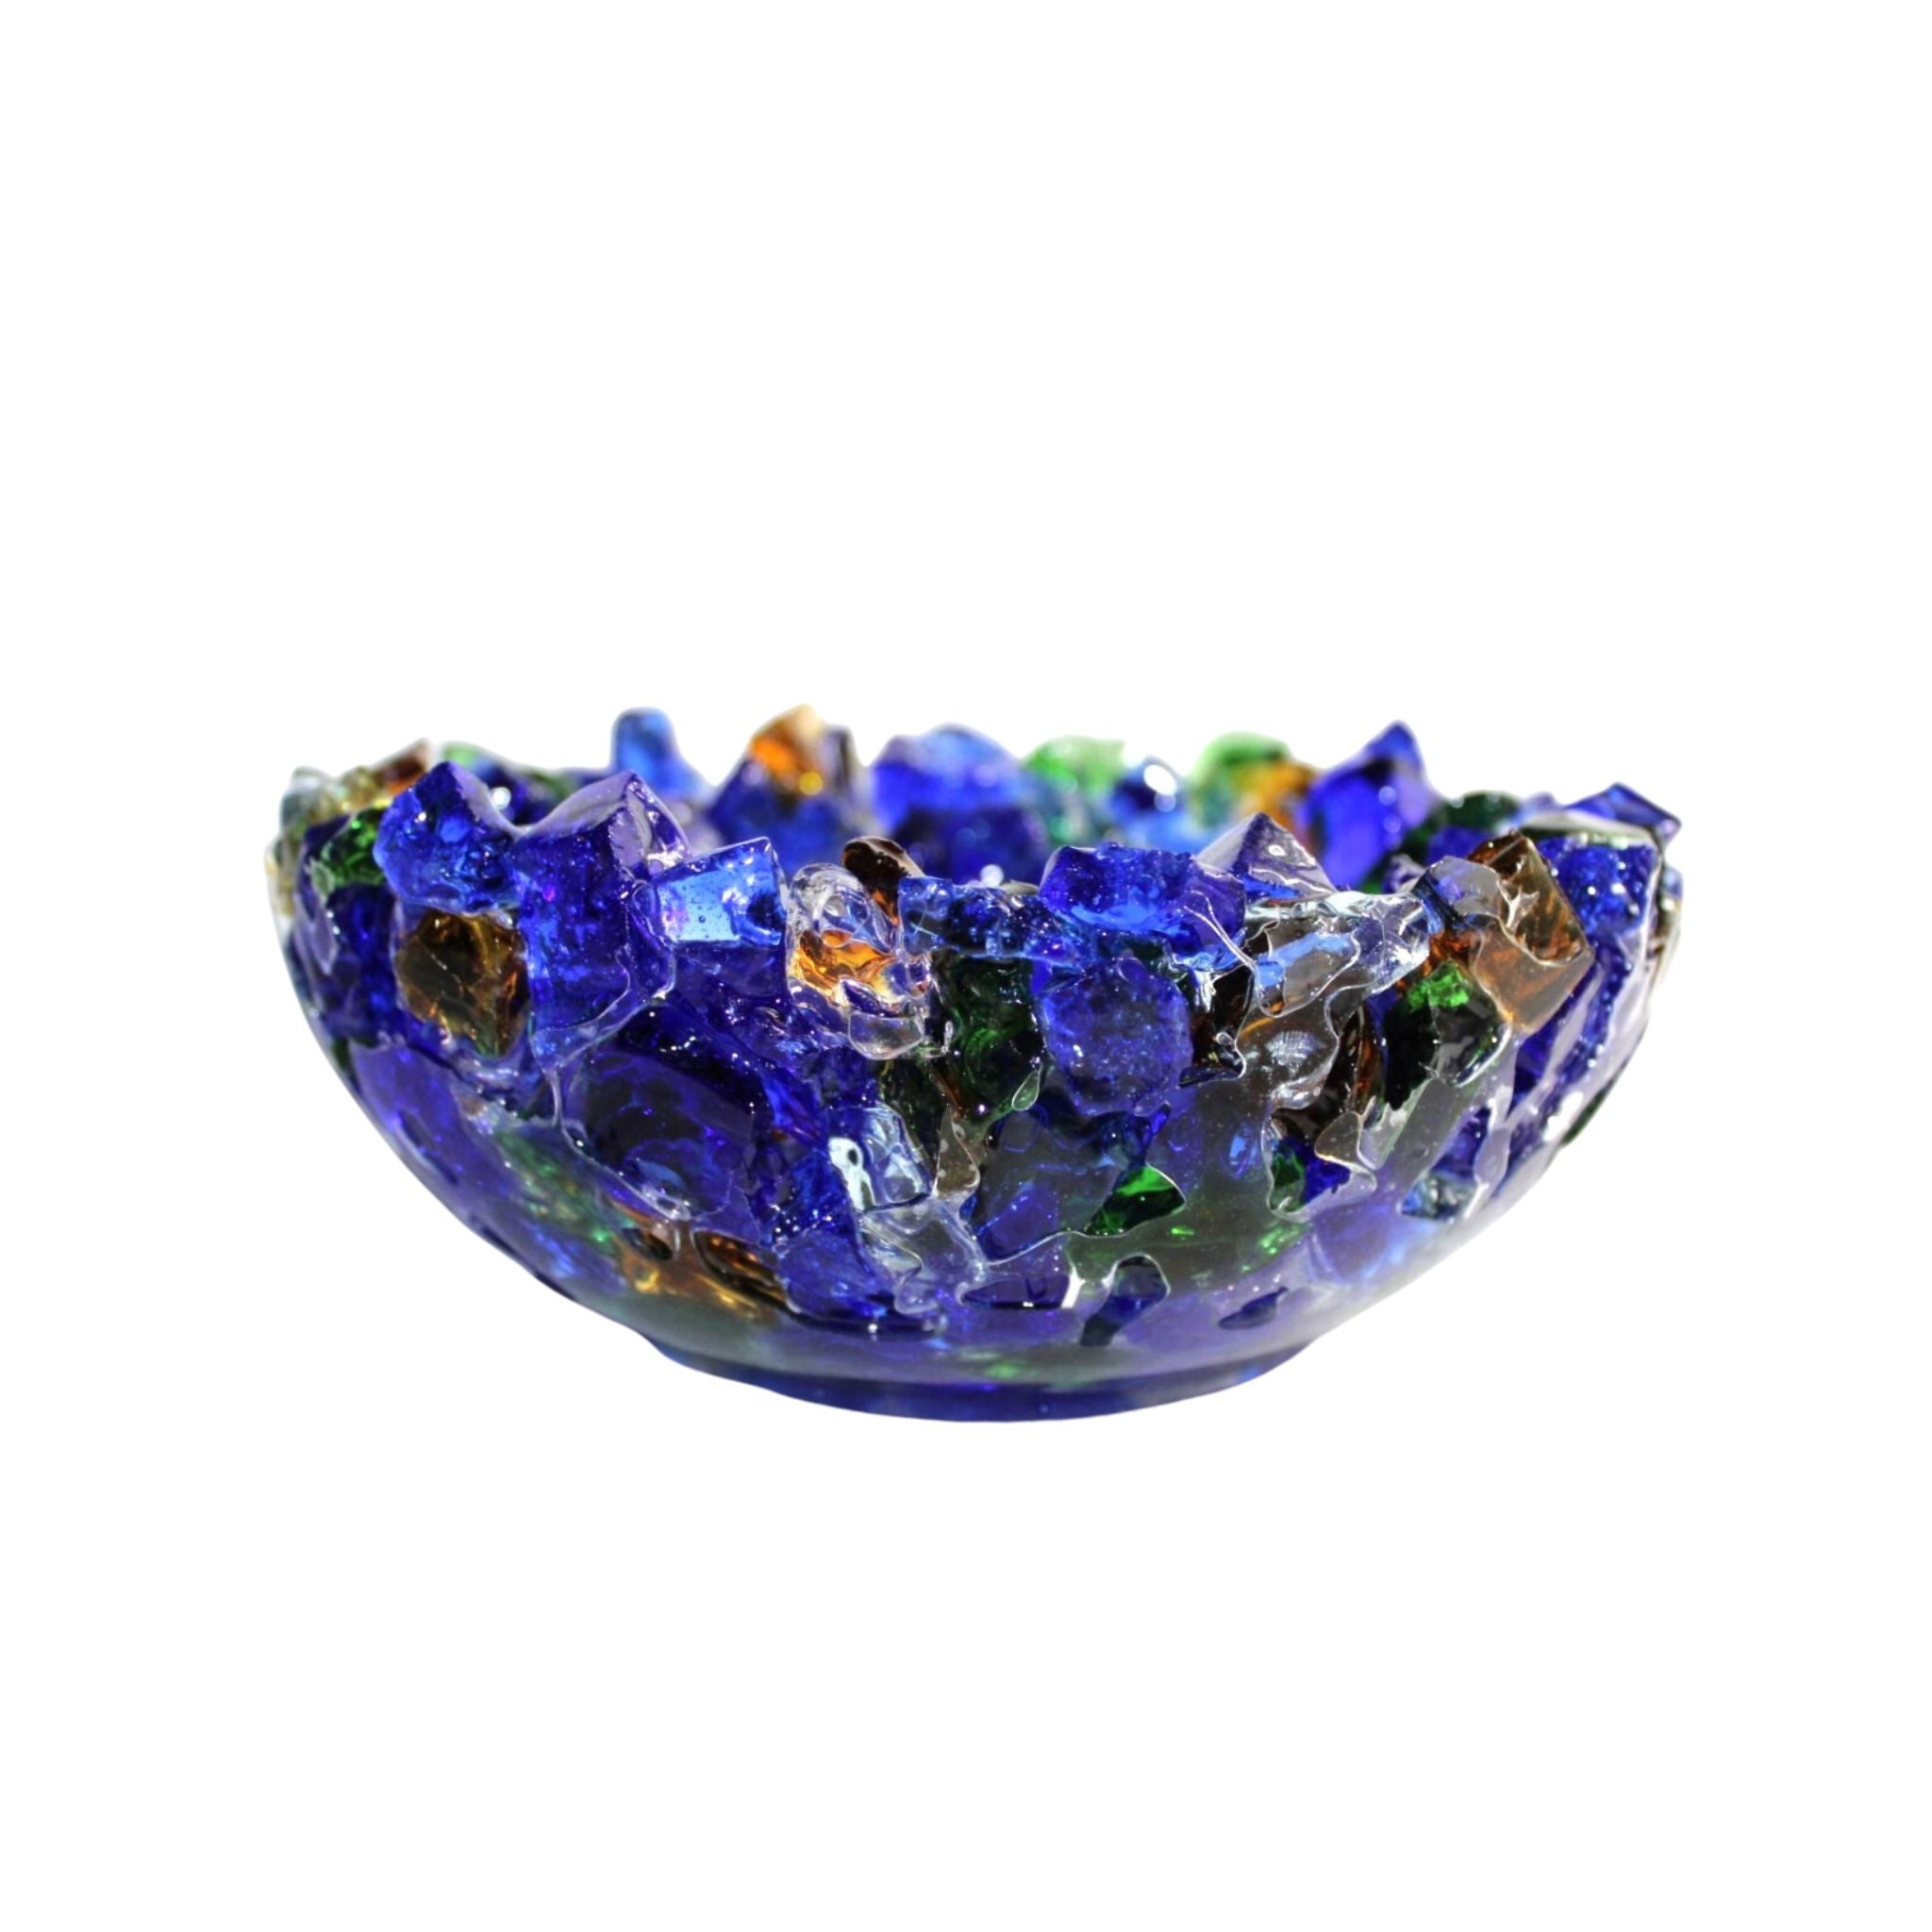 Seaglass bowl TM Pacific blend - large bowl - Patent Pending